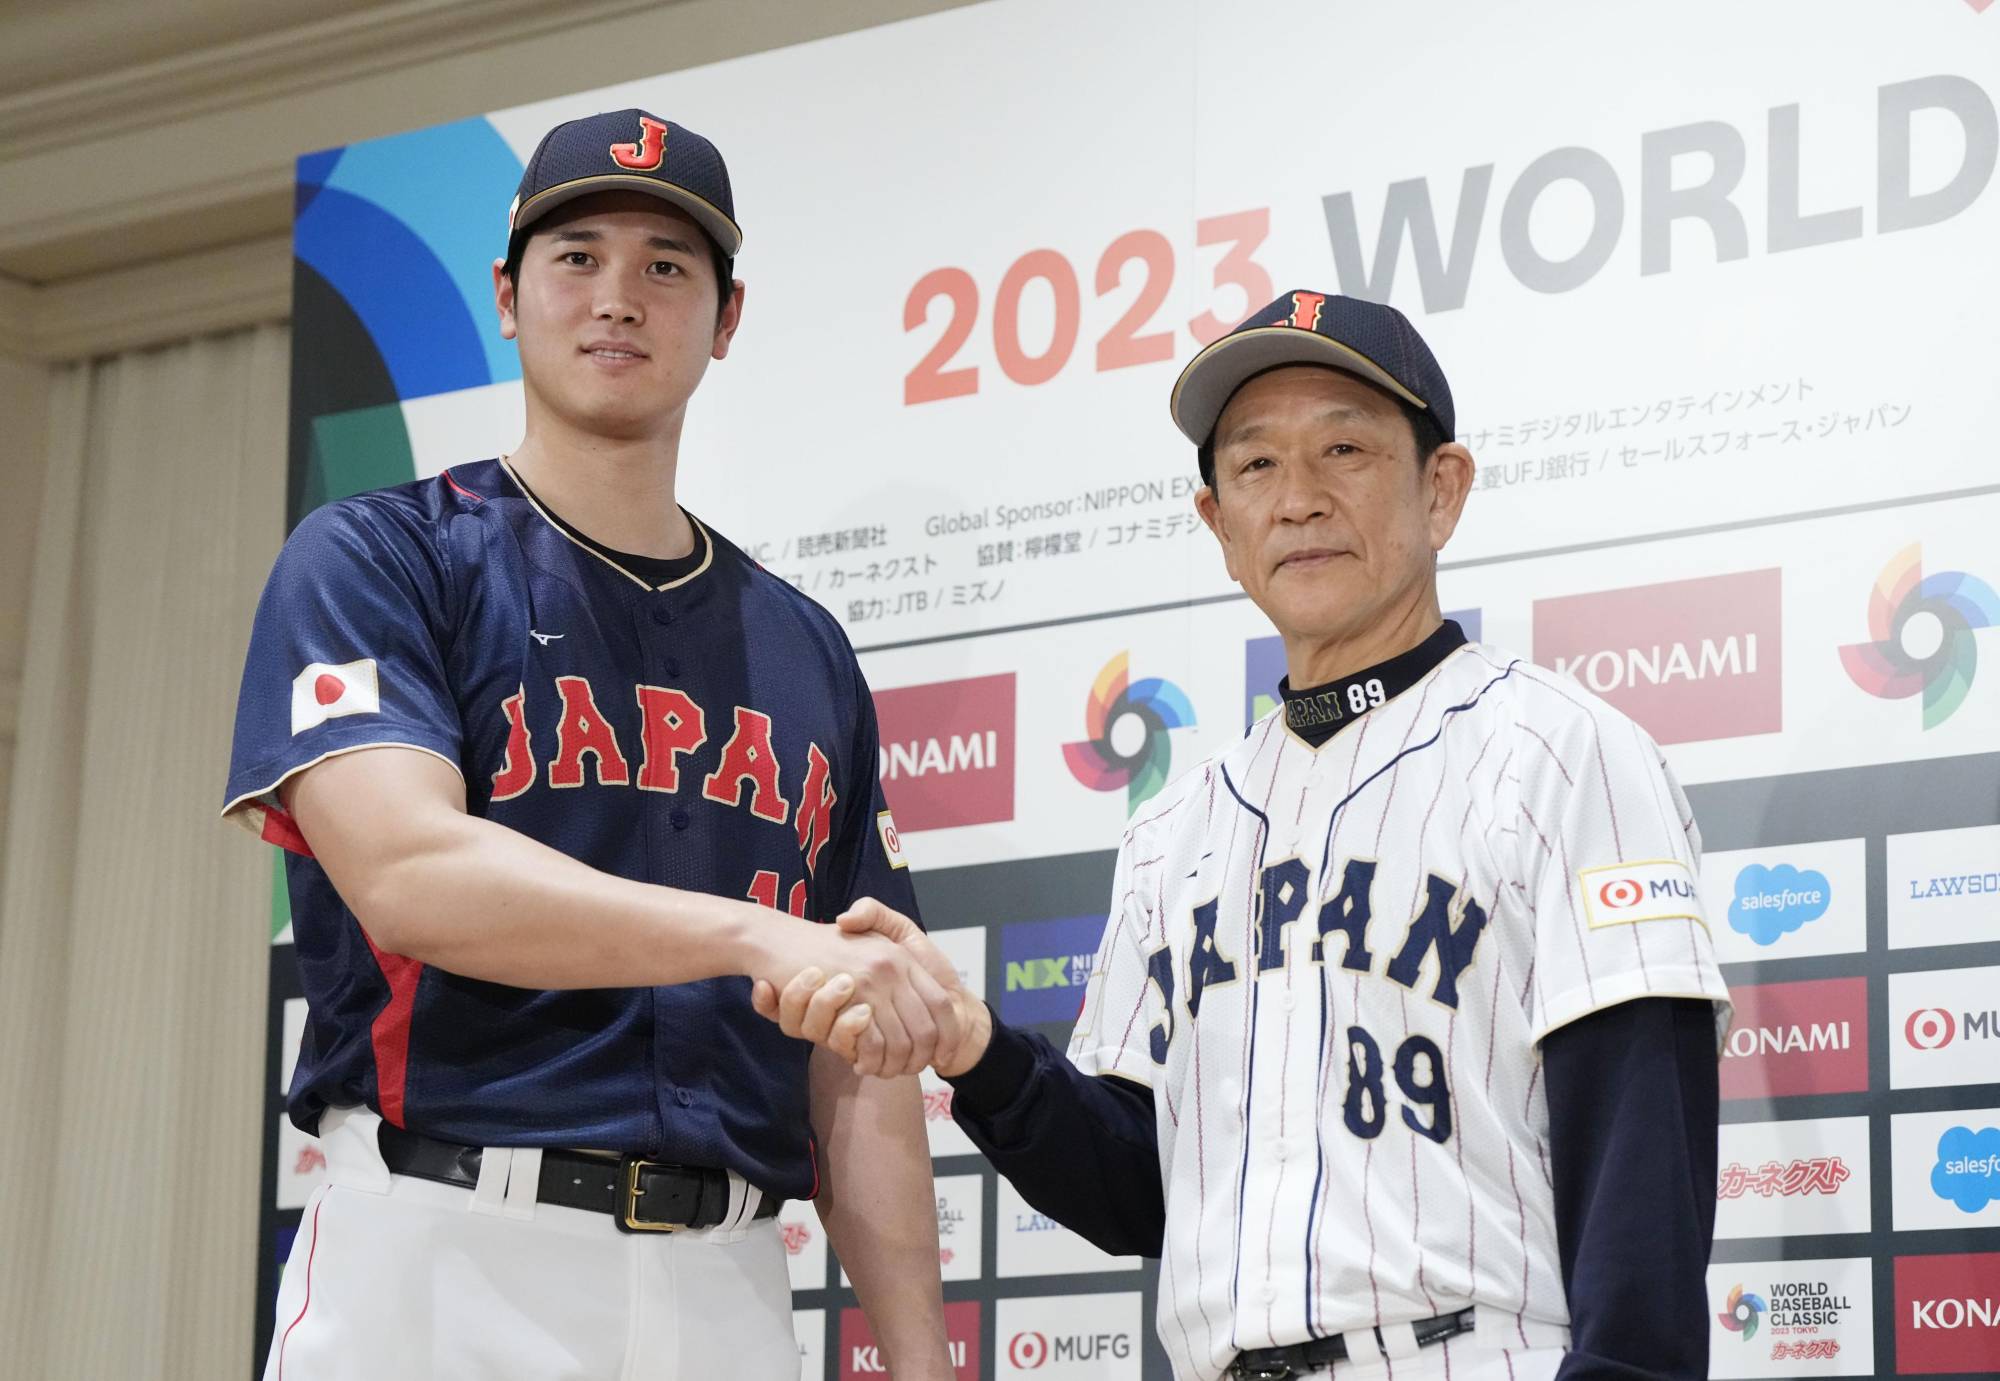 Shohei Ohtani to skip Japan camp ahead of World Baseball Classic